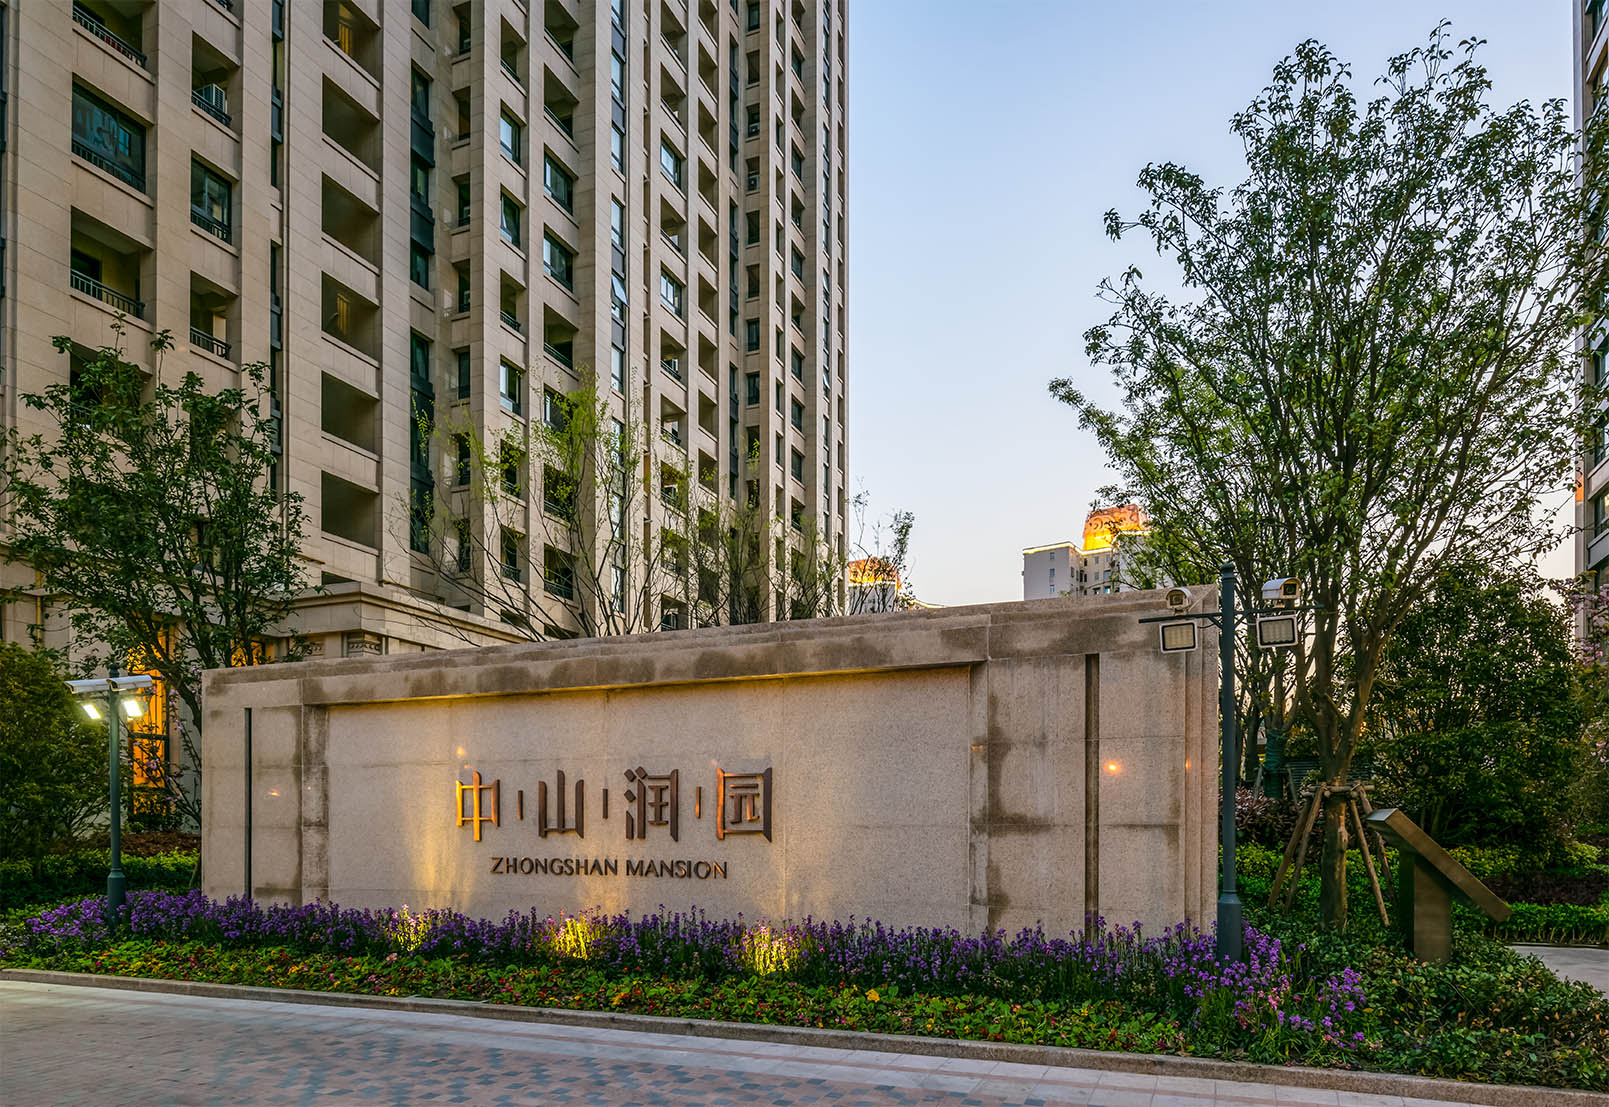 磐润中山润园 | 普利斯设计集团 <br/>Panrun Zhongshan Mansion | Place Design Group